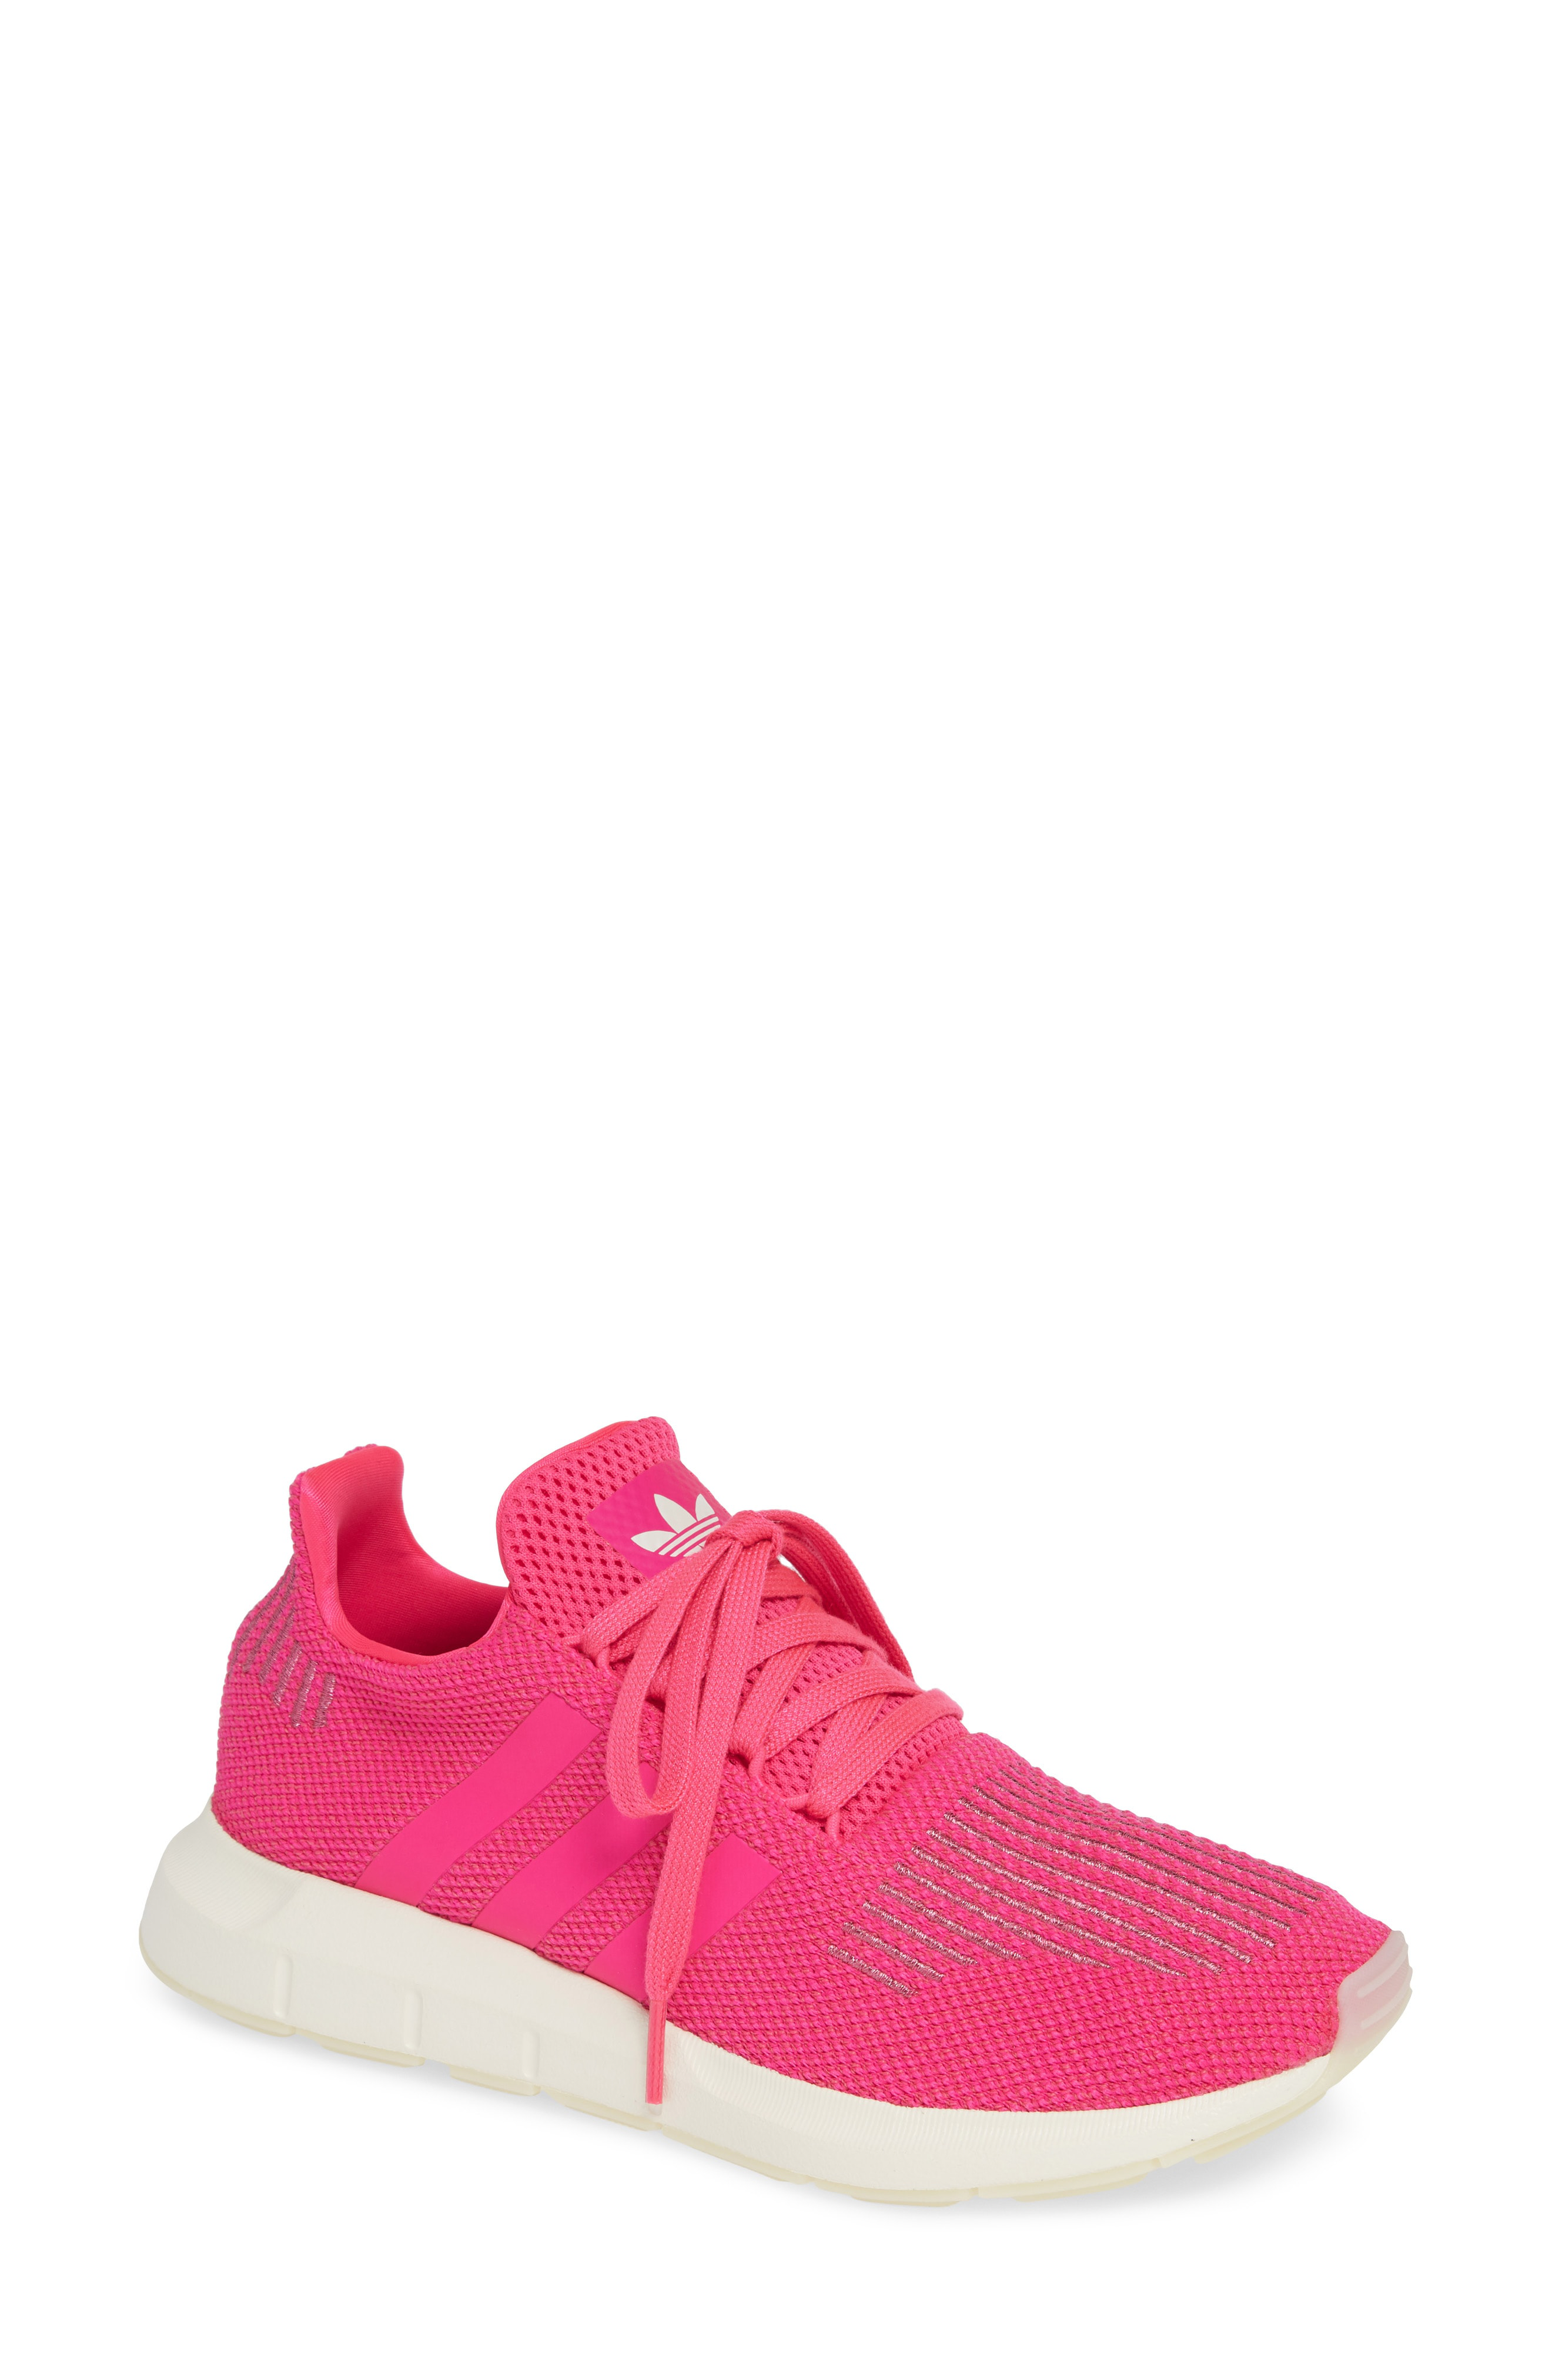 Adidas Originals Swift Run Trainer Sneakers, Shock Pink In Shock Pink ...